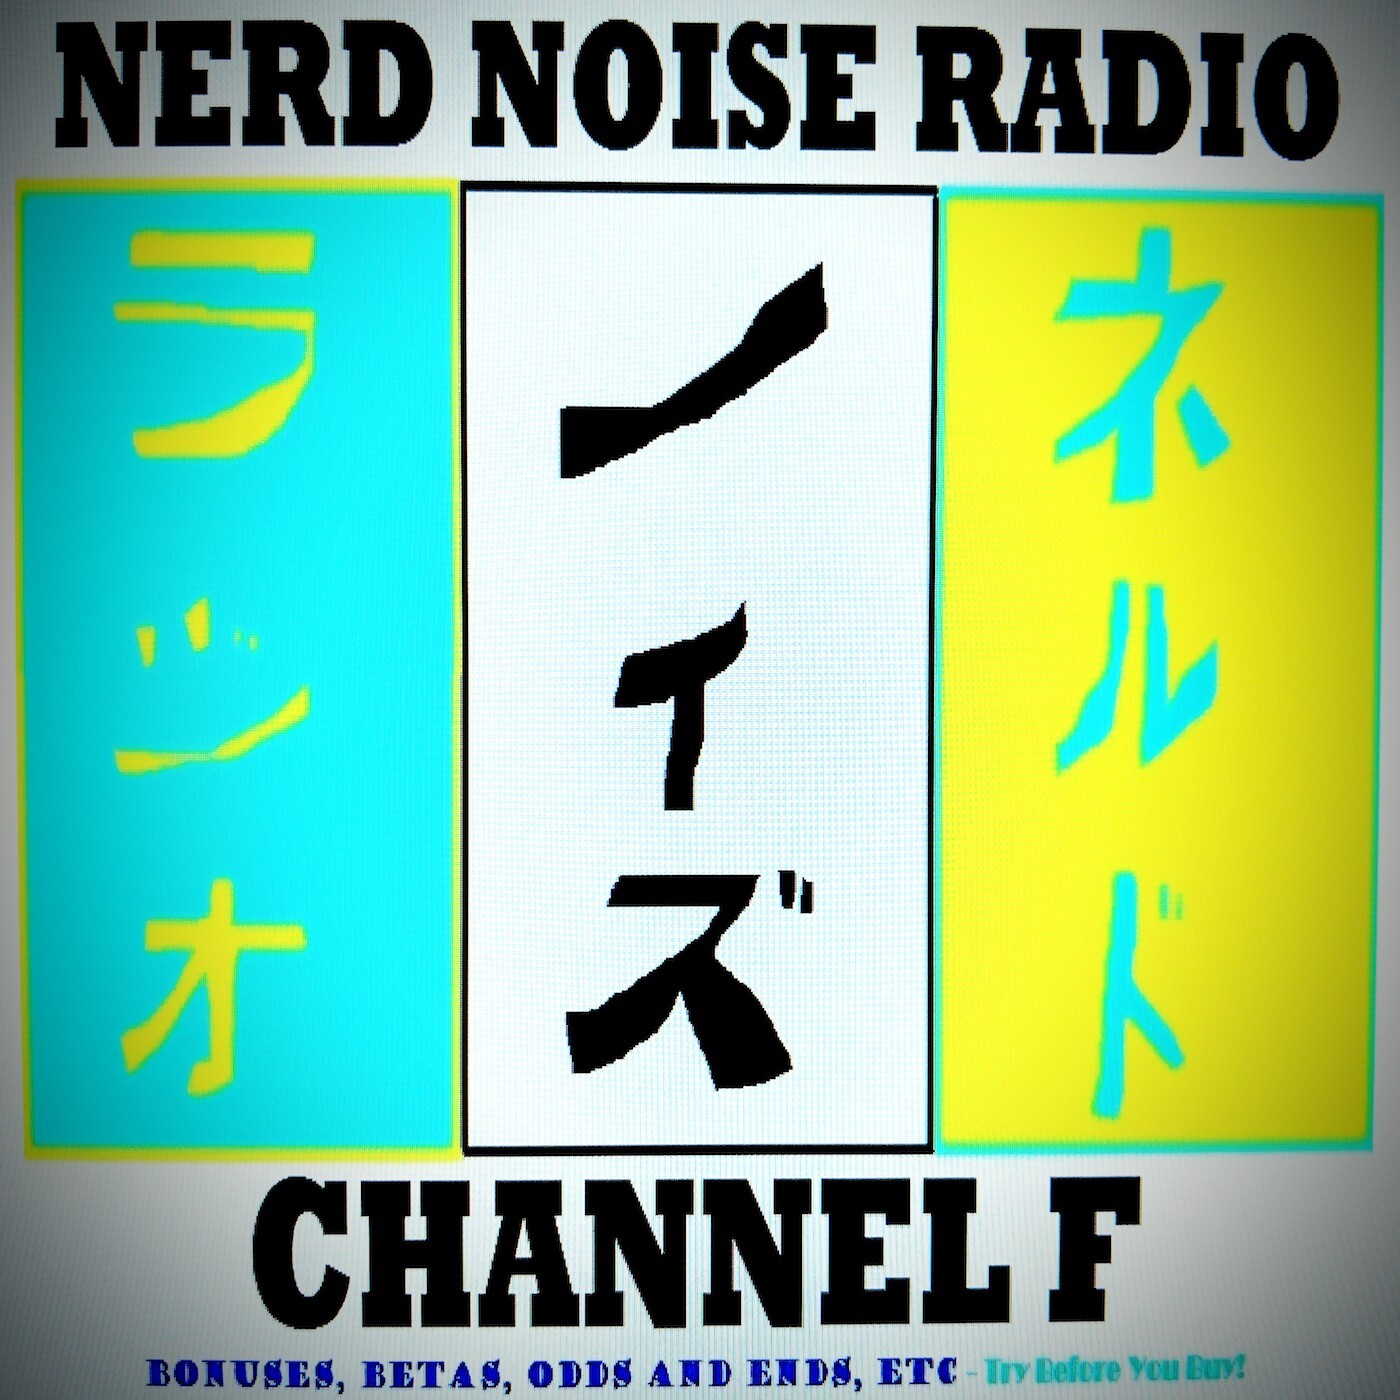 Nerd Noise Radio - Channel F: FaceOff Friday - vol. 1 - Trey’s Picks!